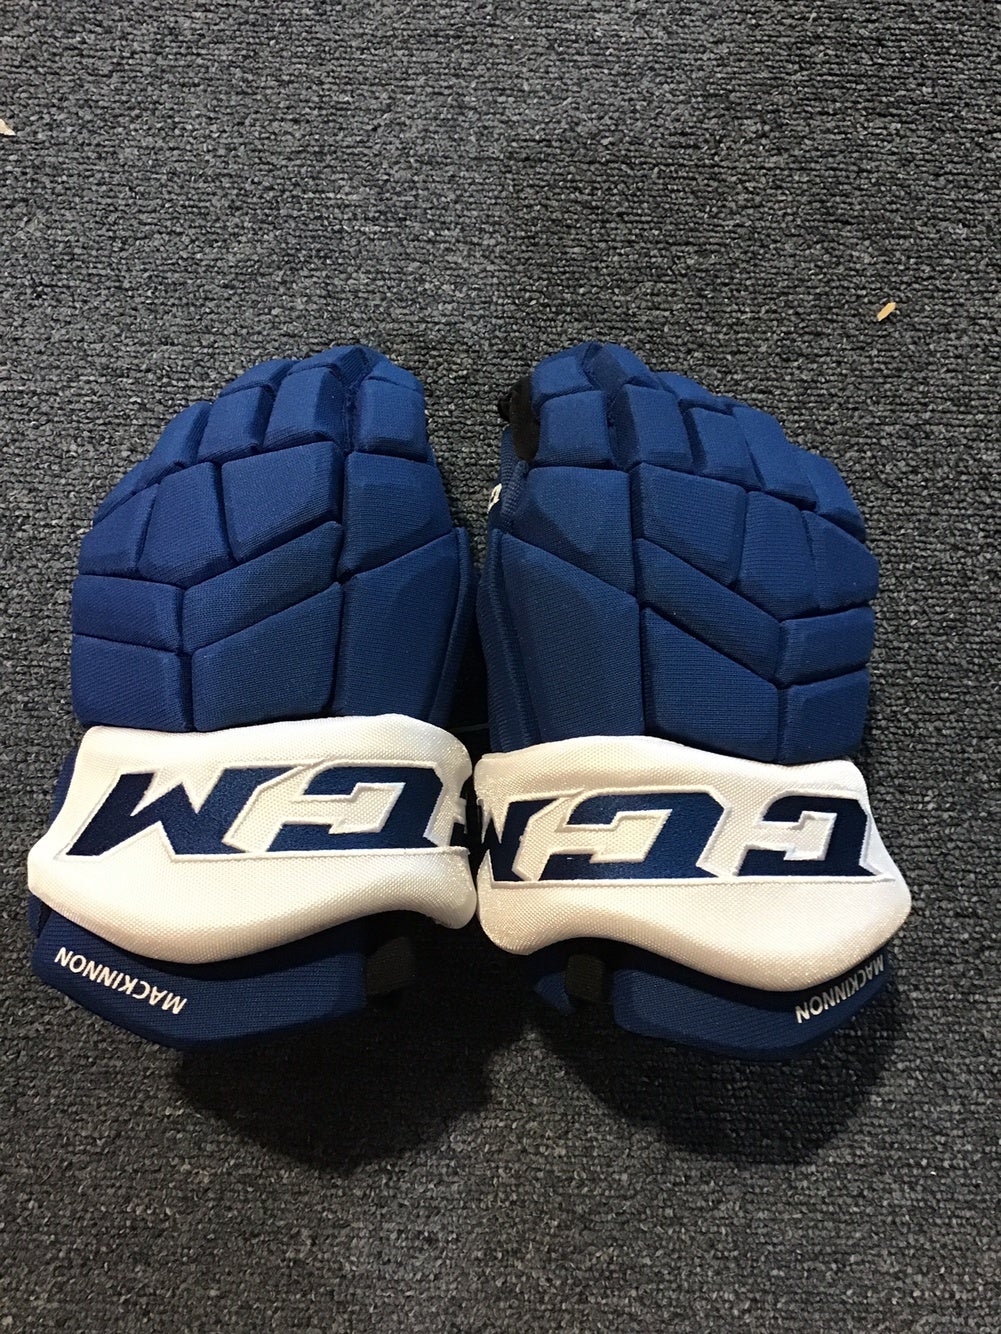 Colorado Avalanche: MacKinnon's Gloves Tease Nordiques Rumour